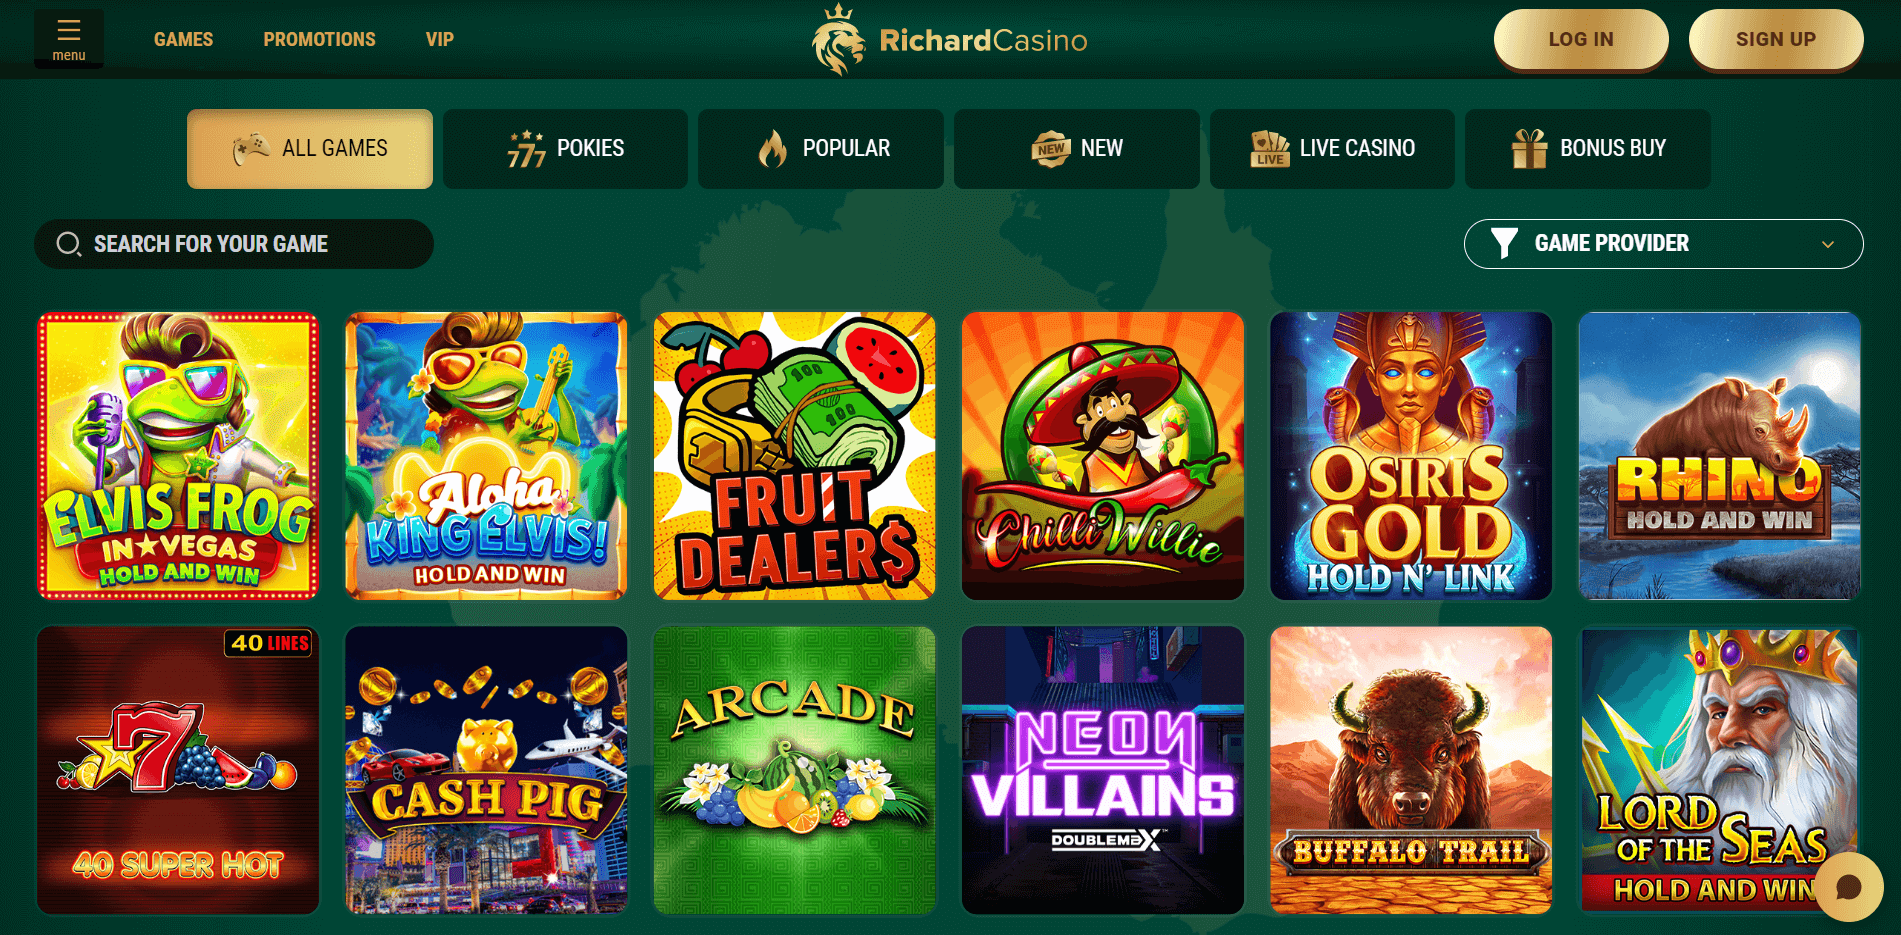 Richard Online Casino all games